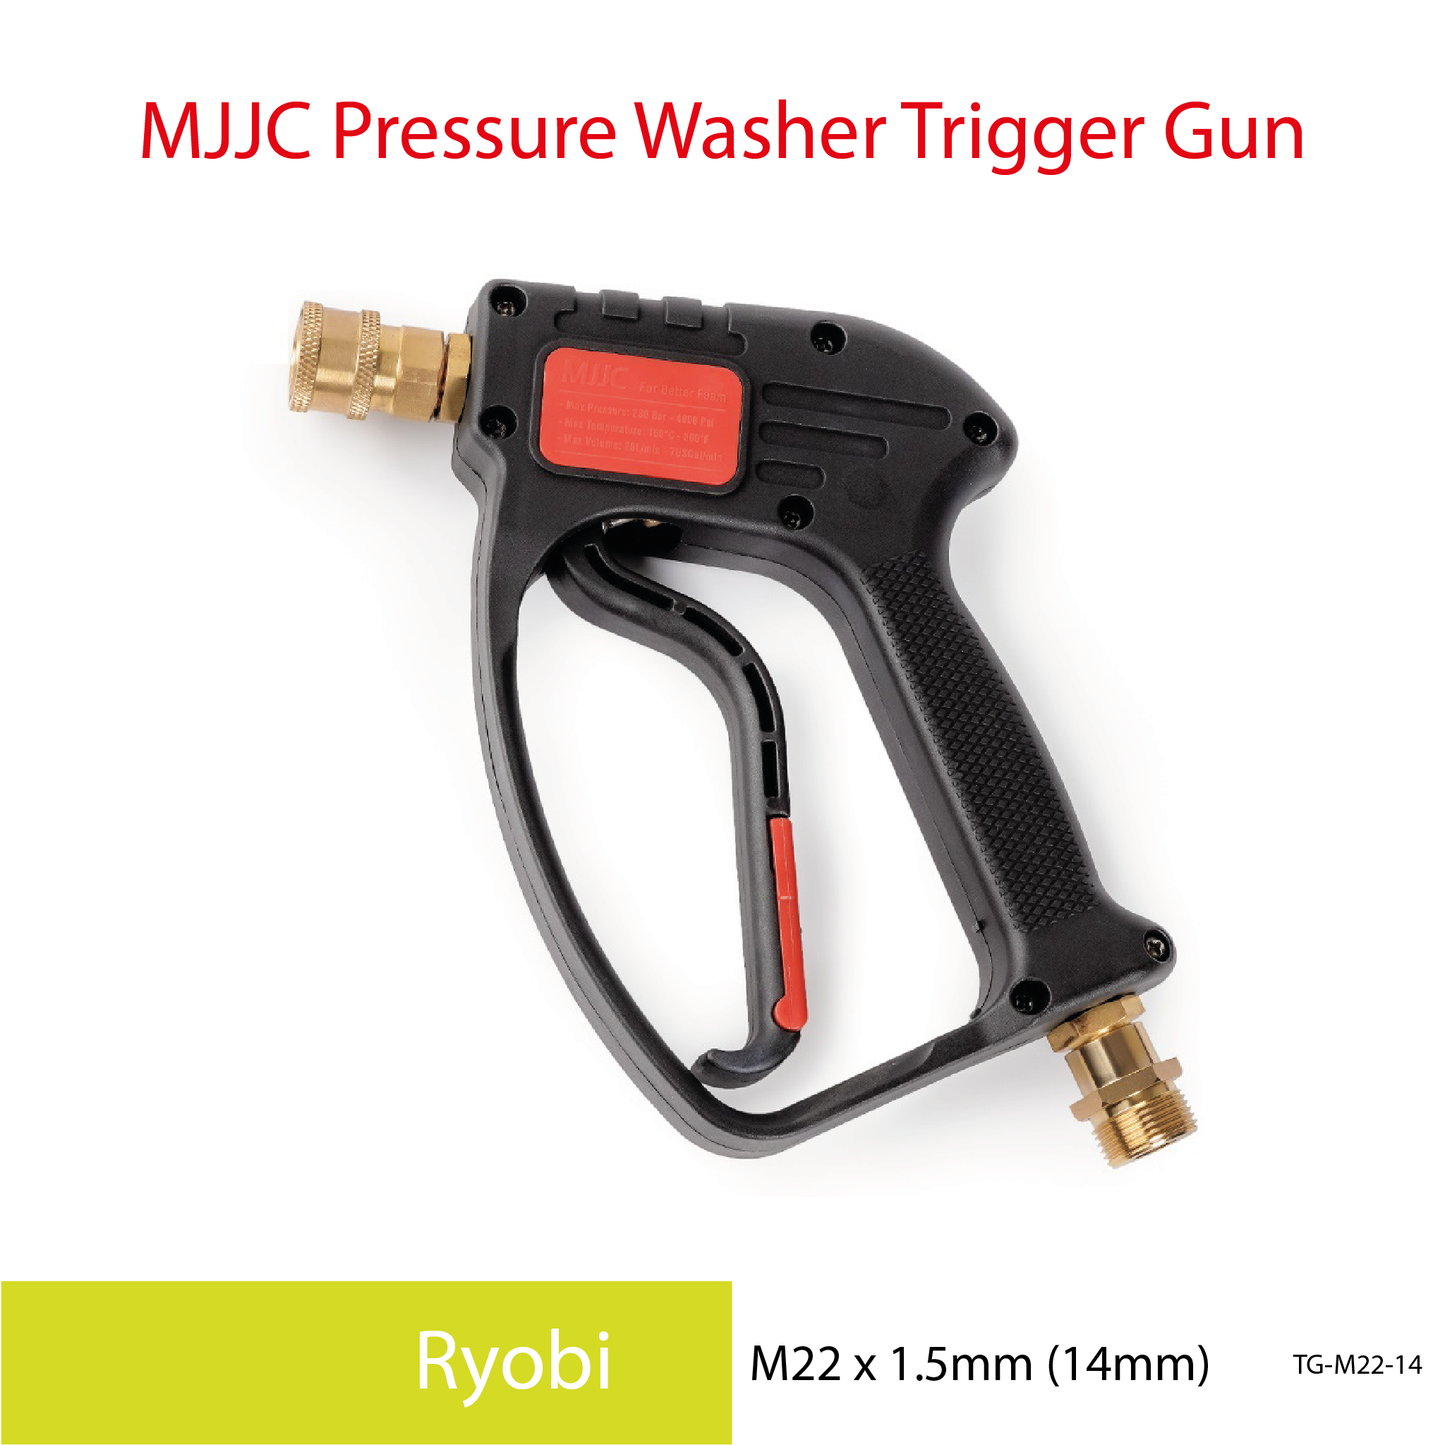 Ryobi - MJJC Light Weight Pressure Washer Trigger Spray Gun with Live Swivel